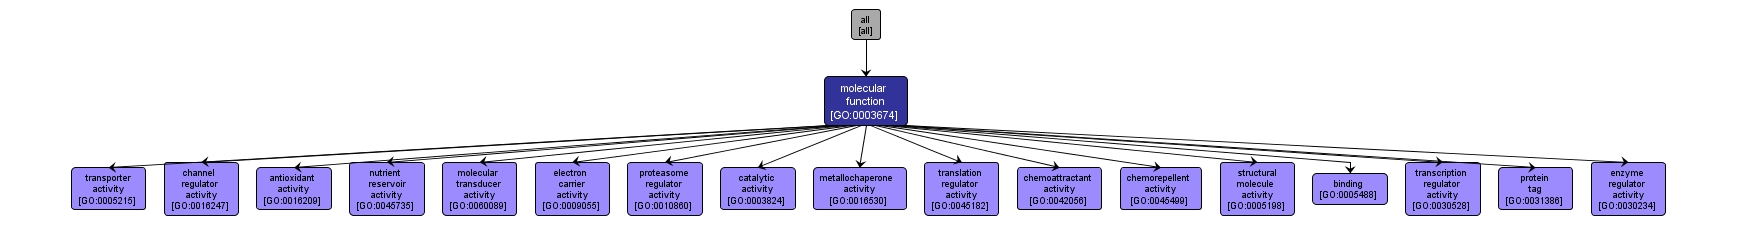 GO:0003674 - molecular_function (interactive image map)